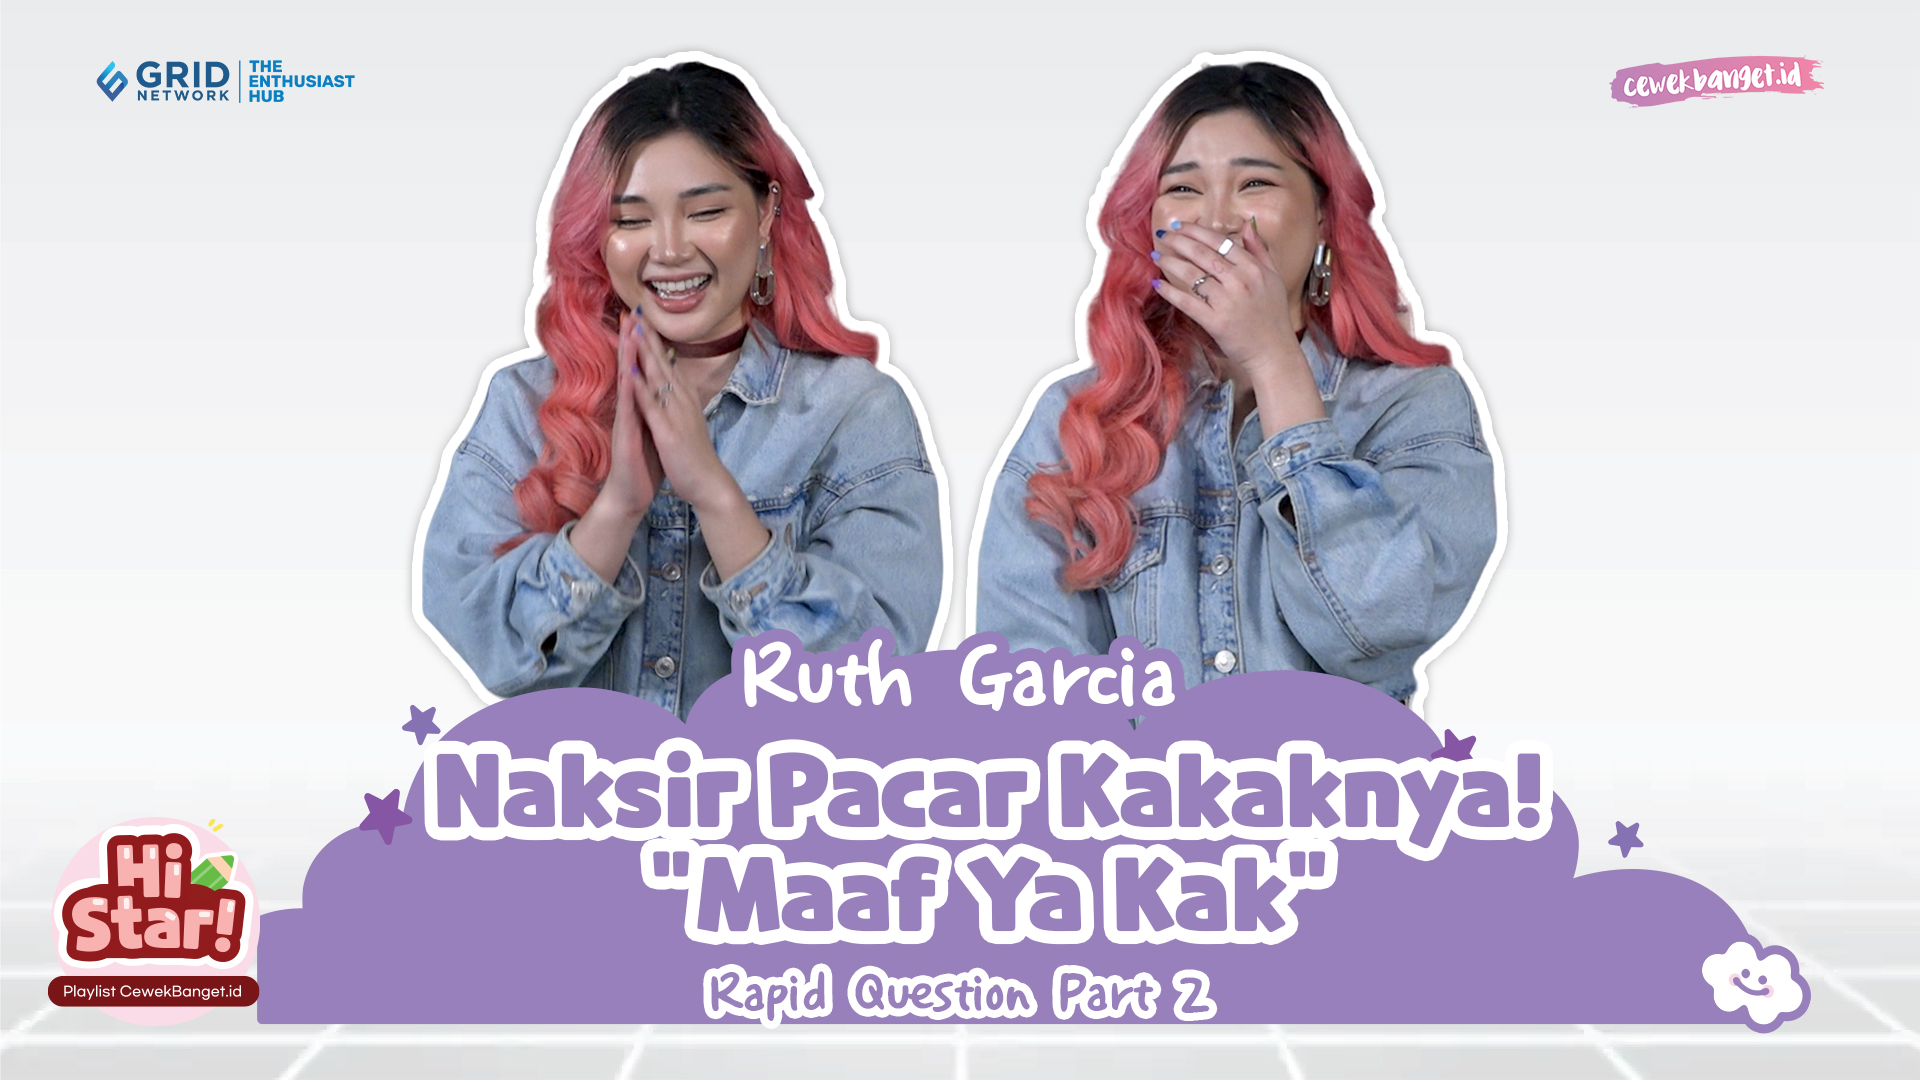 WOW!! RUTH GARCIA PERNAH NAKSIR PACAR KAKAKNYA RAPID QUESTION PART 2